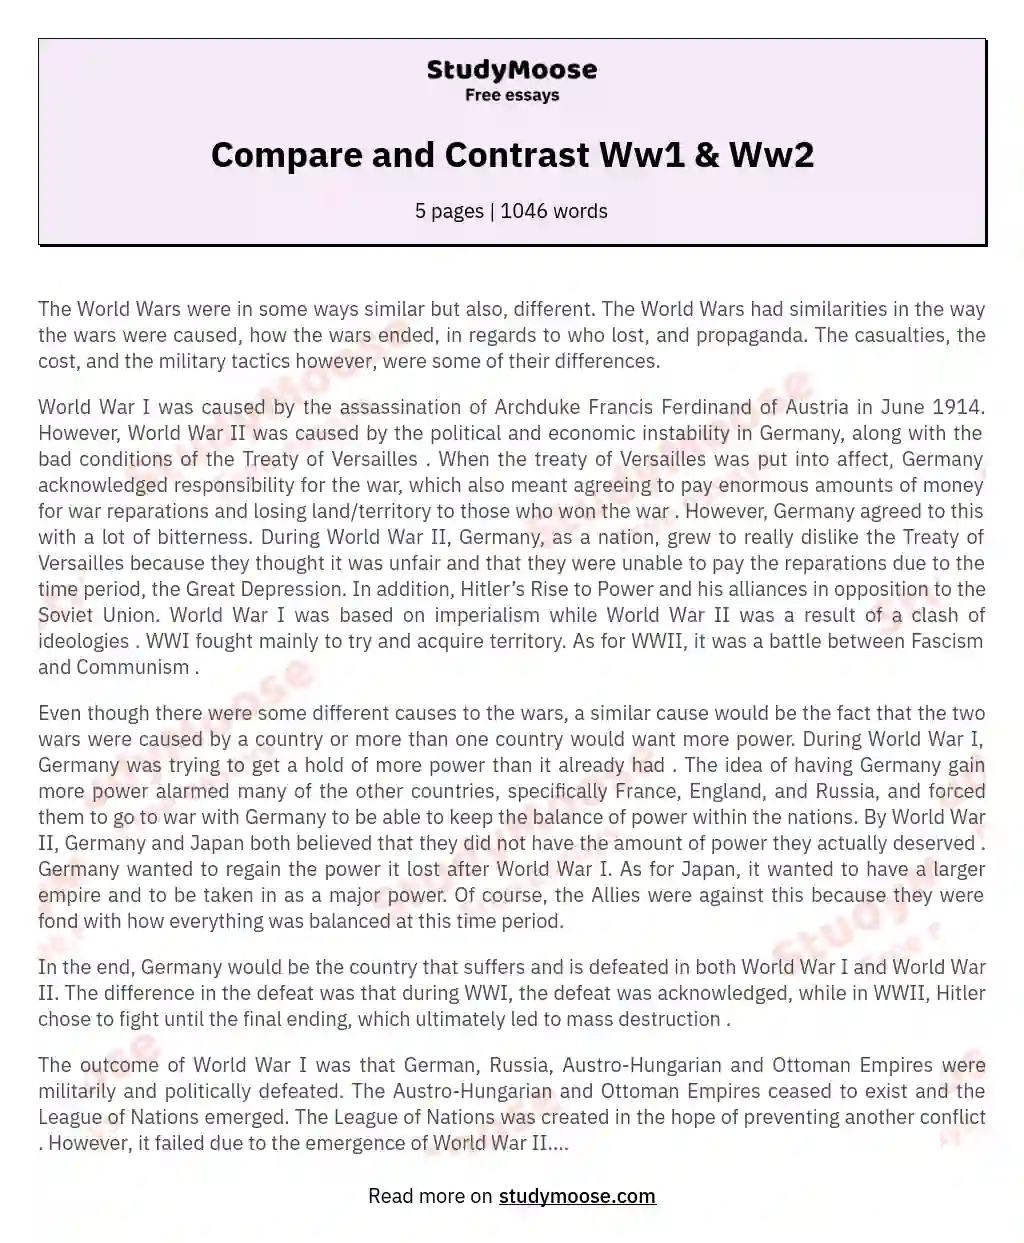 Compare and Contrast Ww1 & Ww2 essay